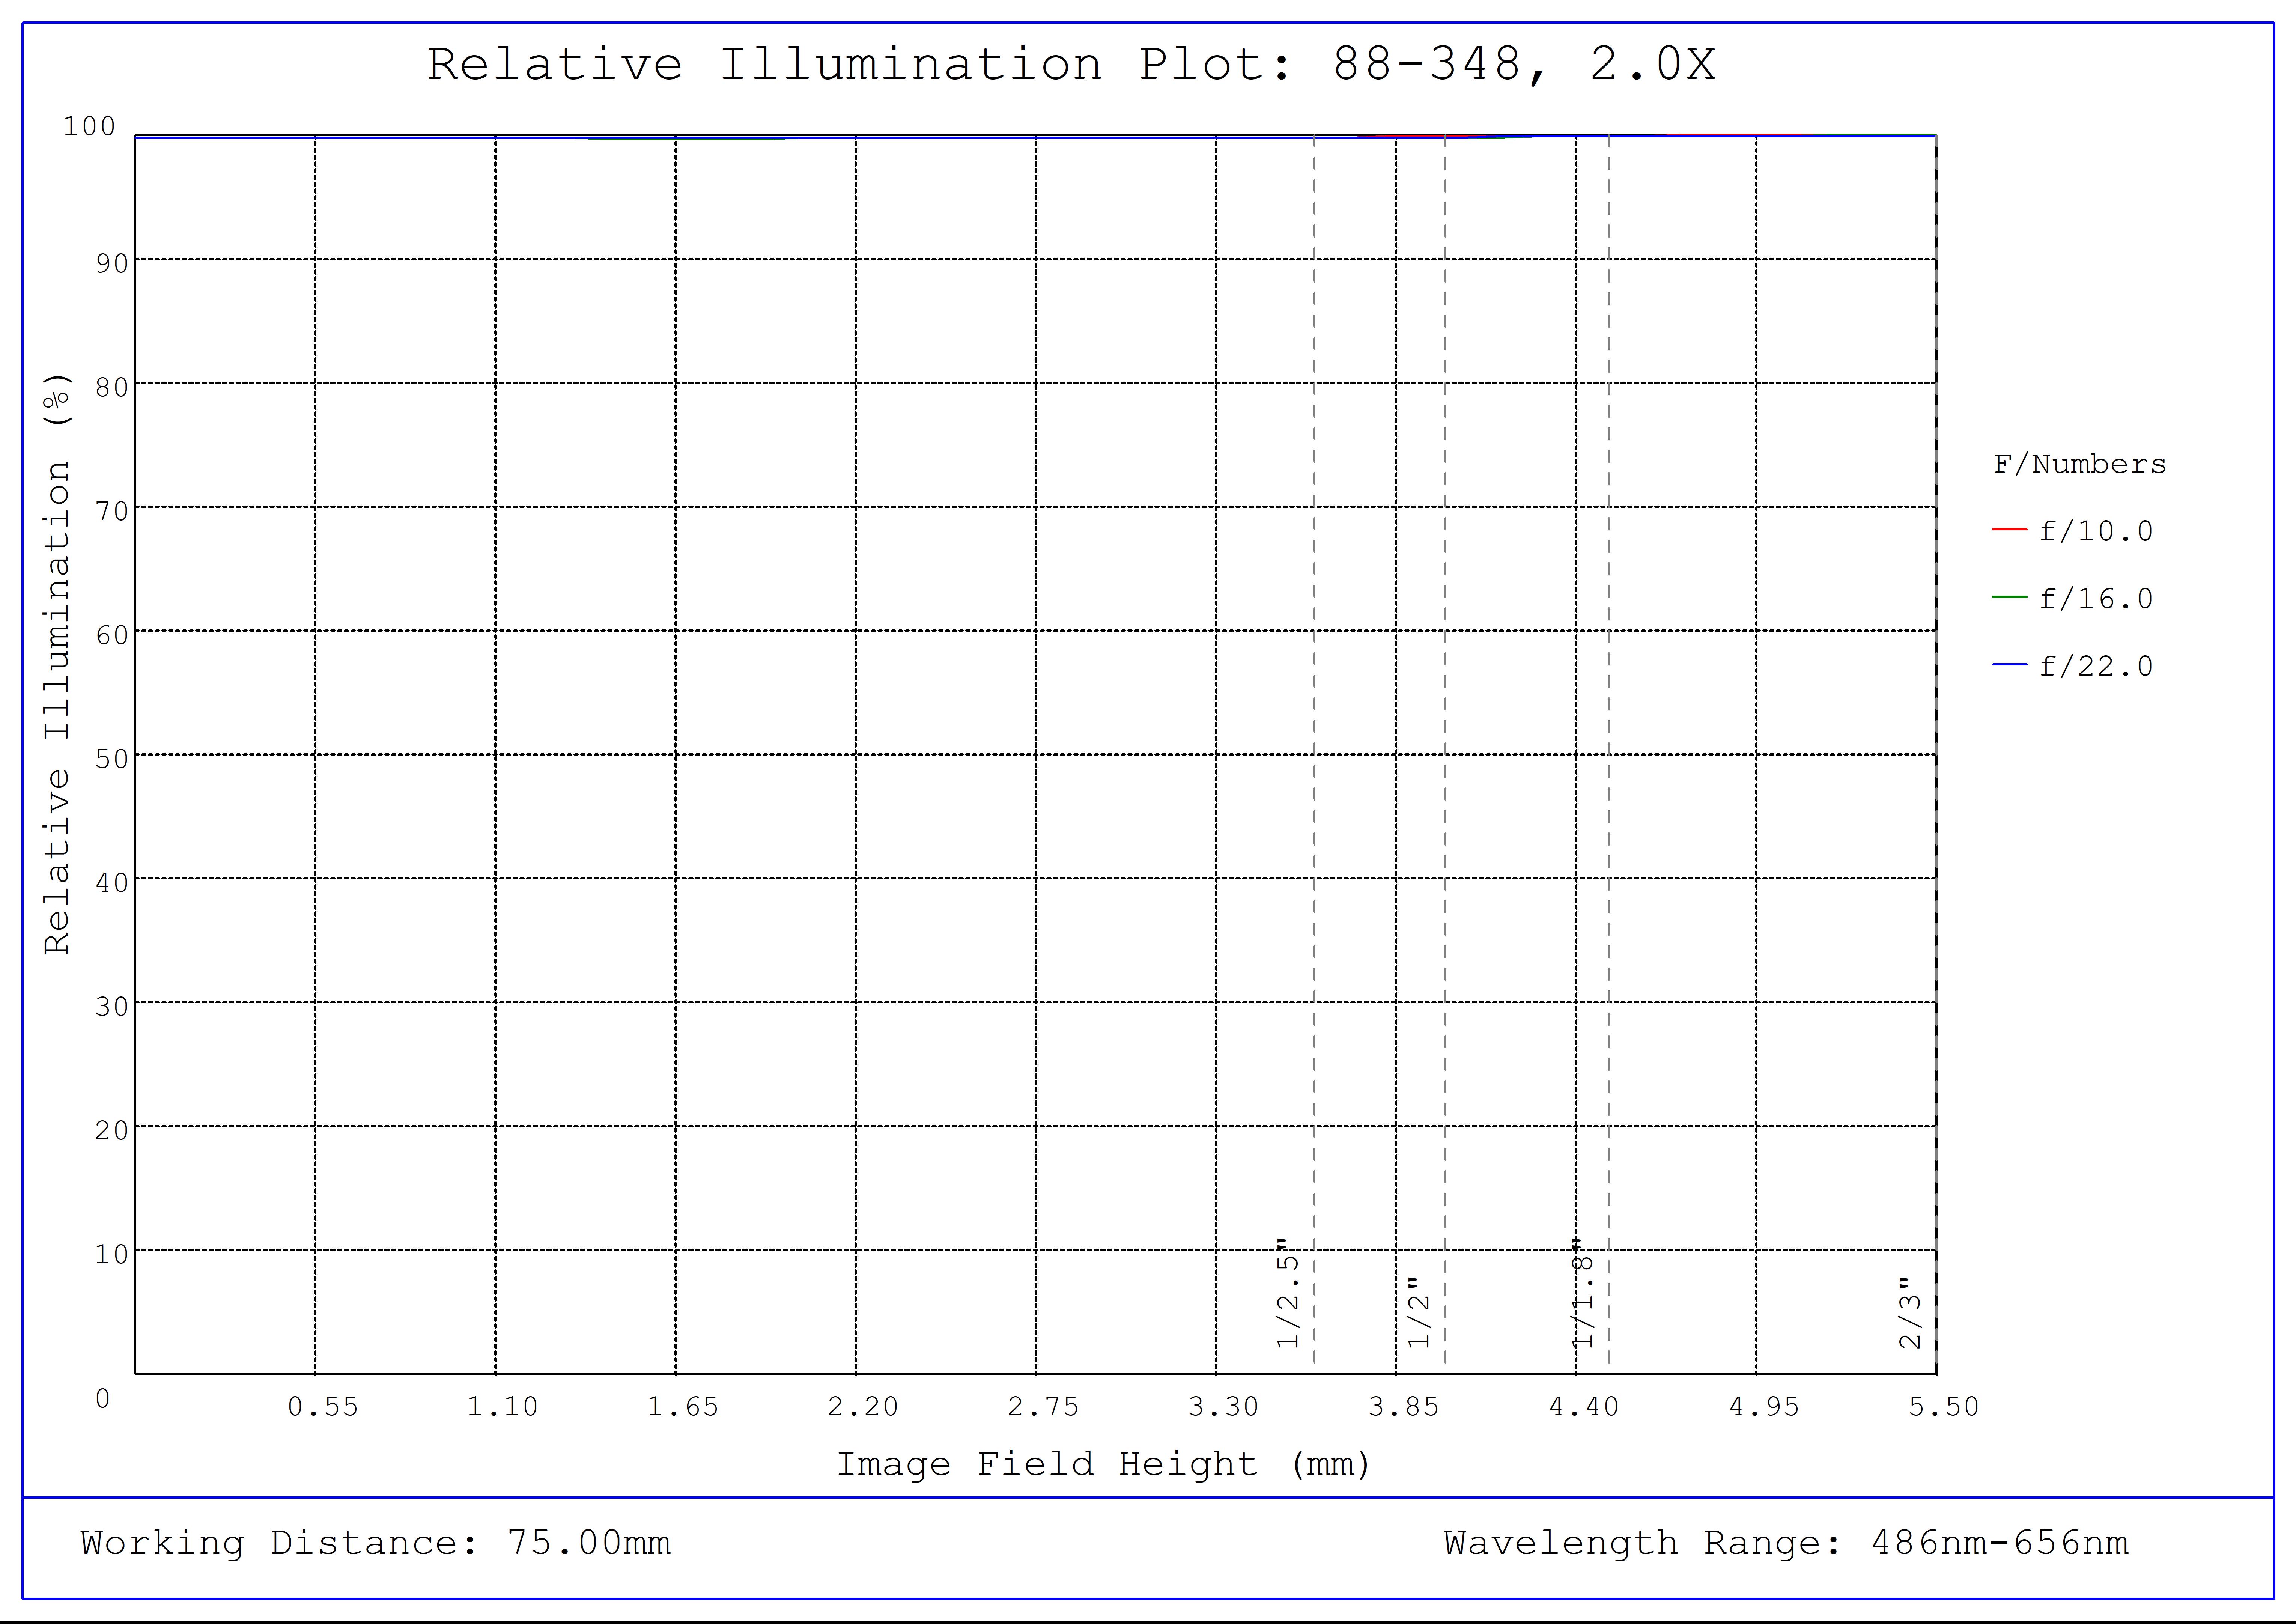 #88-348, 2.0X In-Line Illumination SilverTL™ Telecentric Lens, Relative Illumination Plot